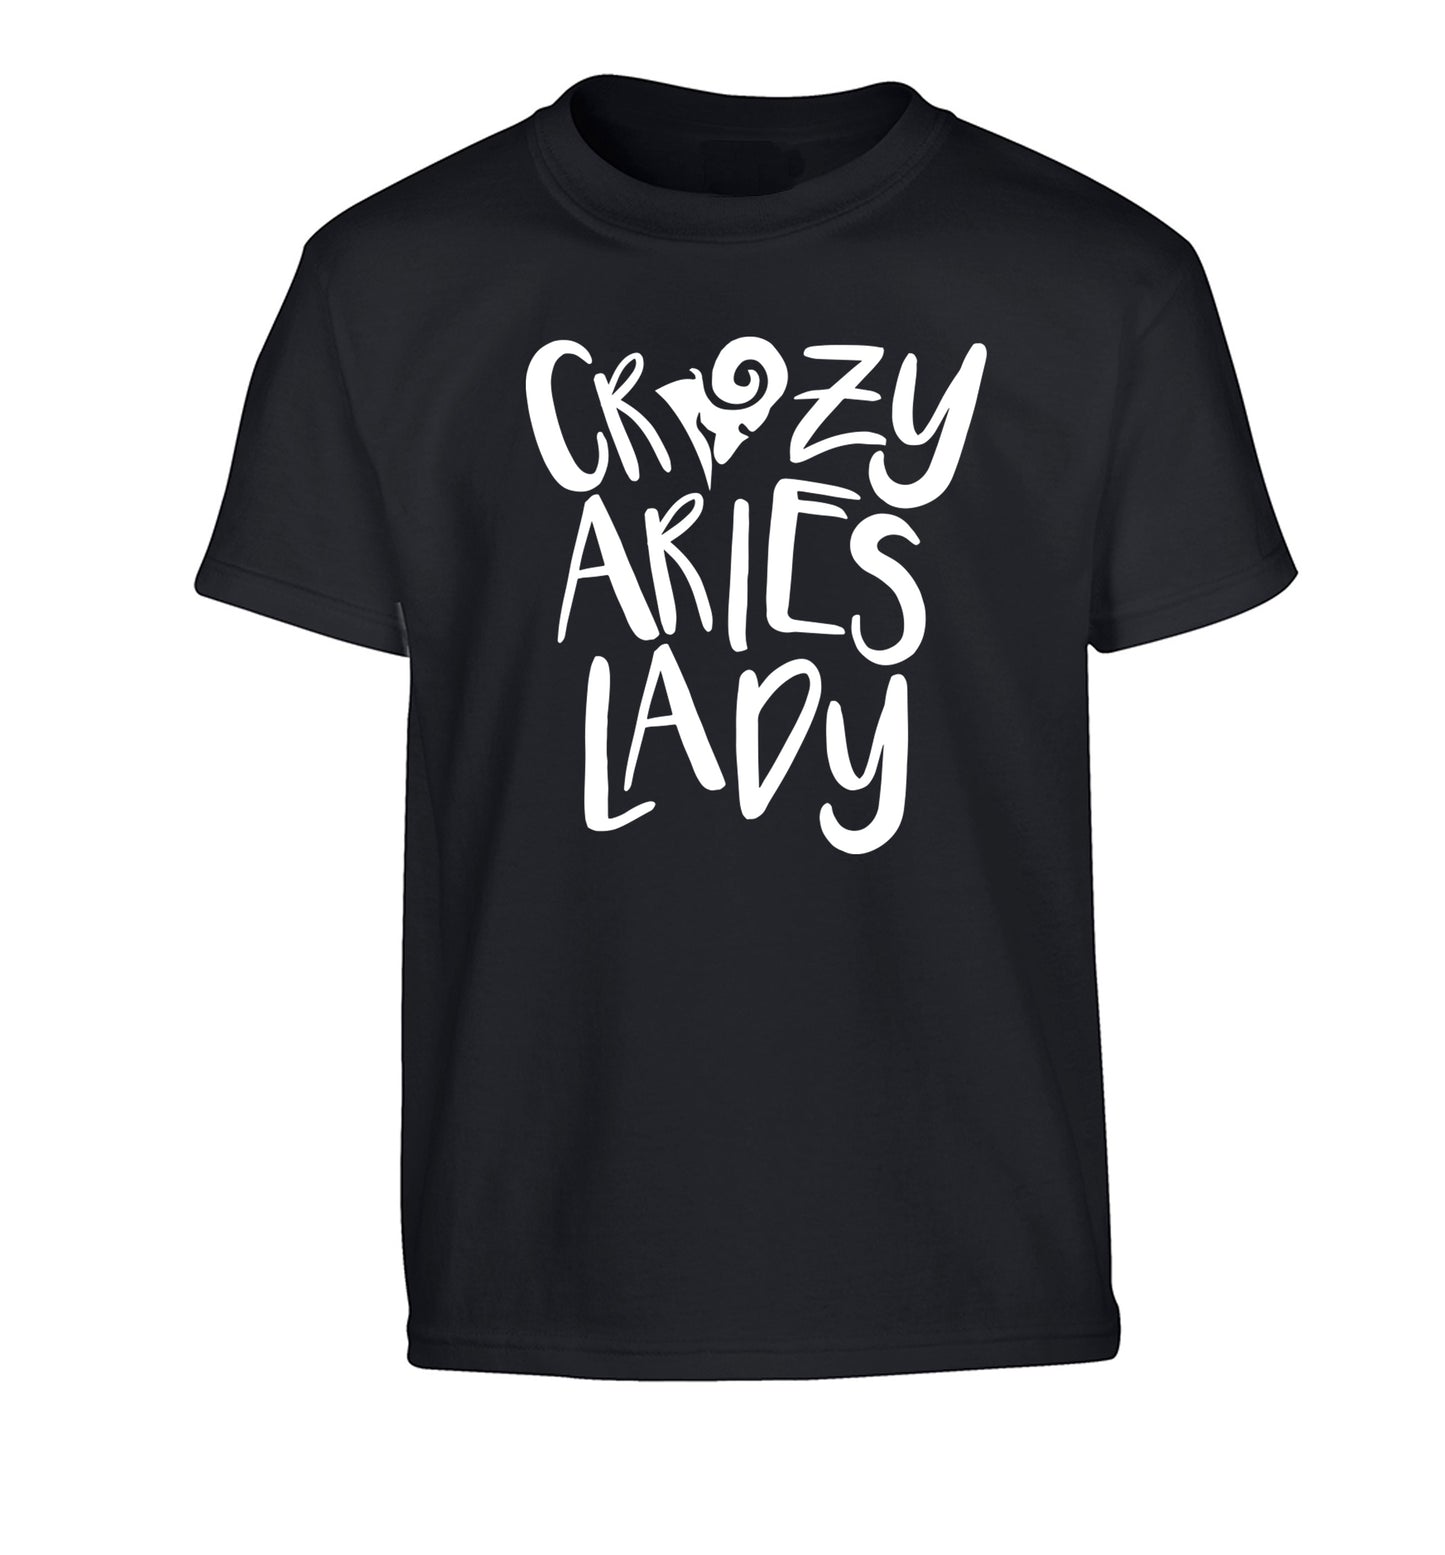 Crazy aries lady Children's black Tshirt 12-13 Years